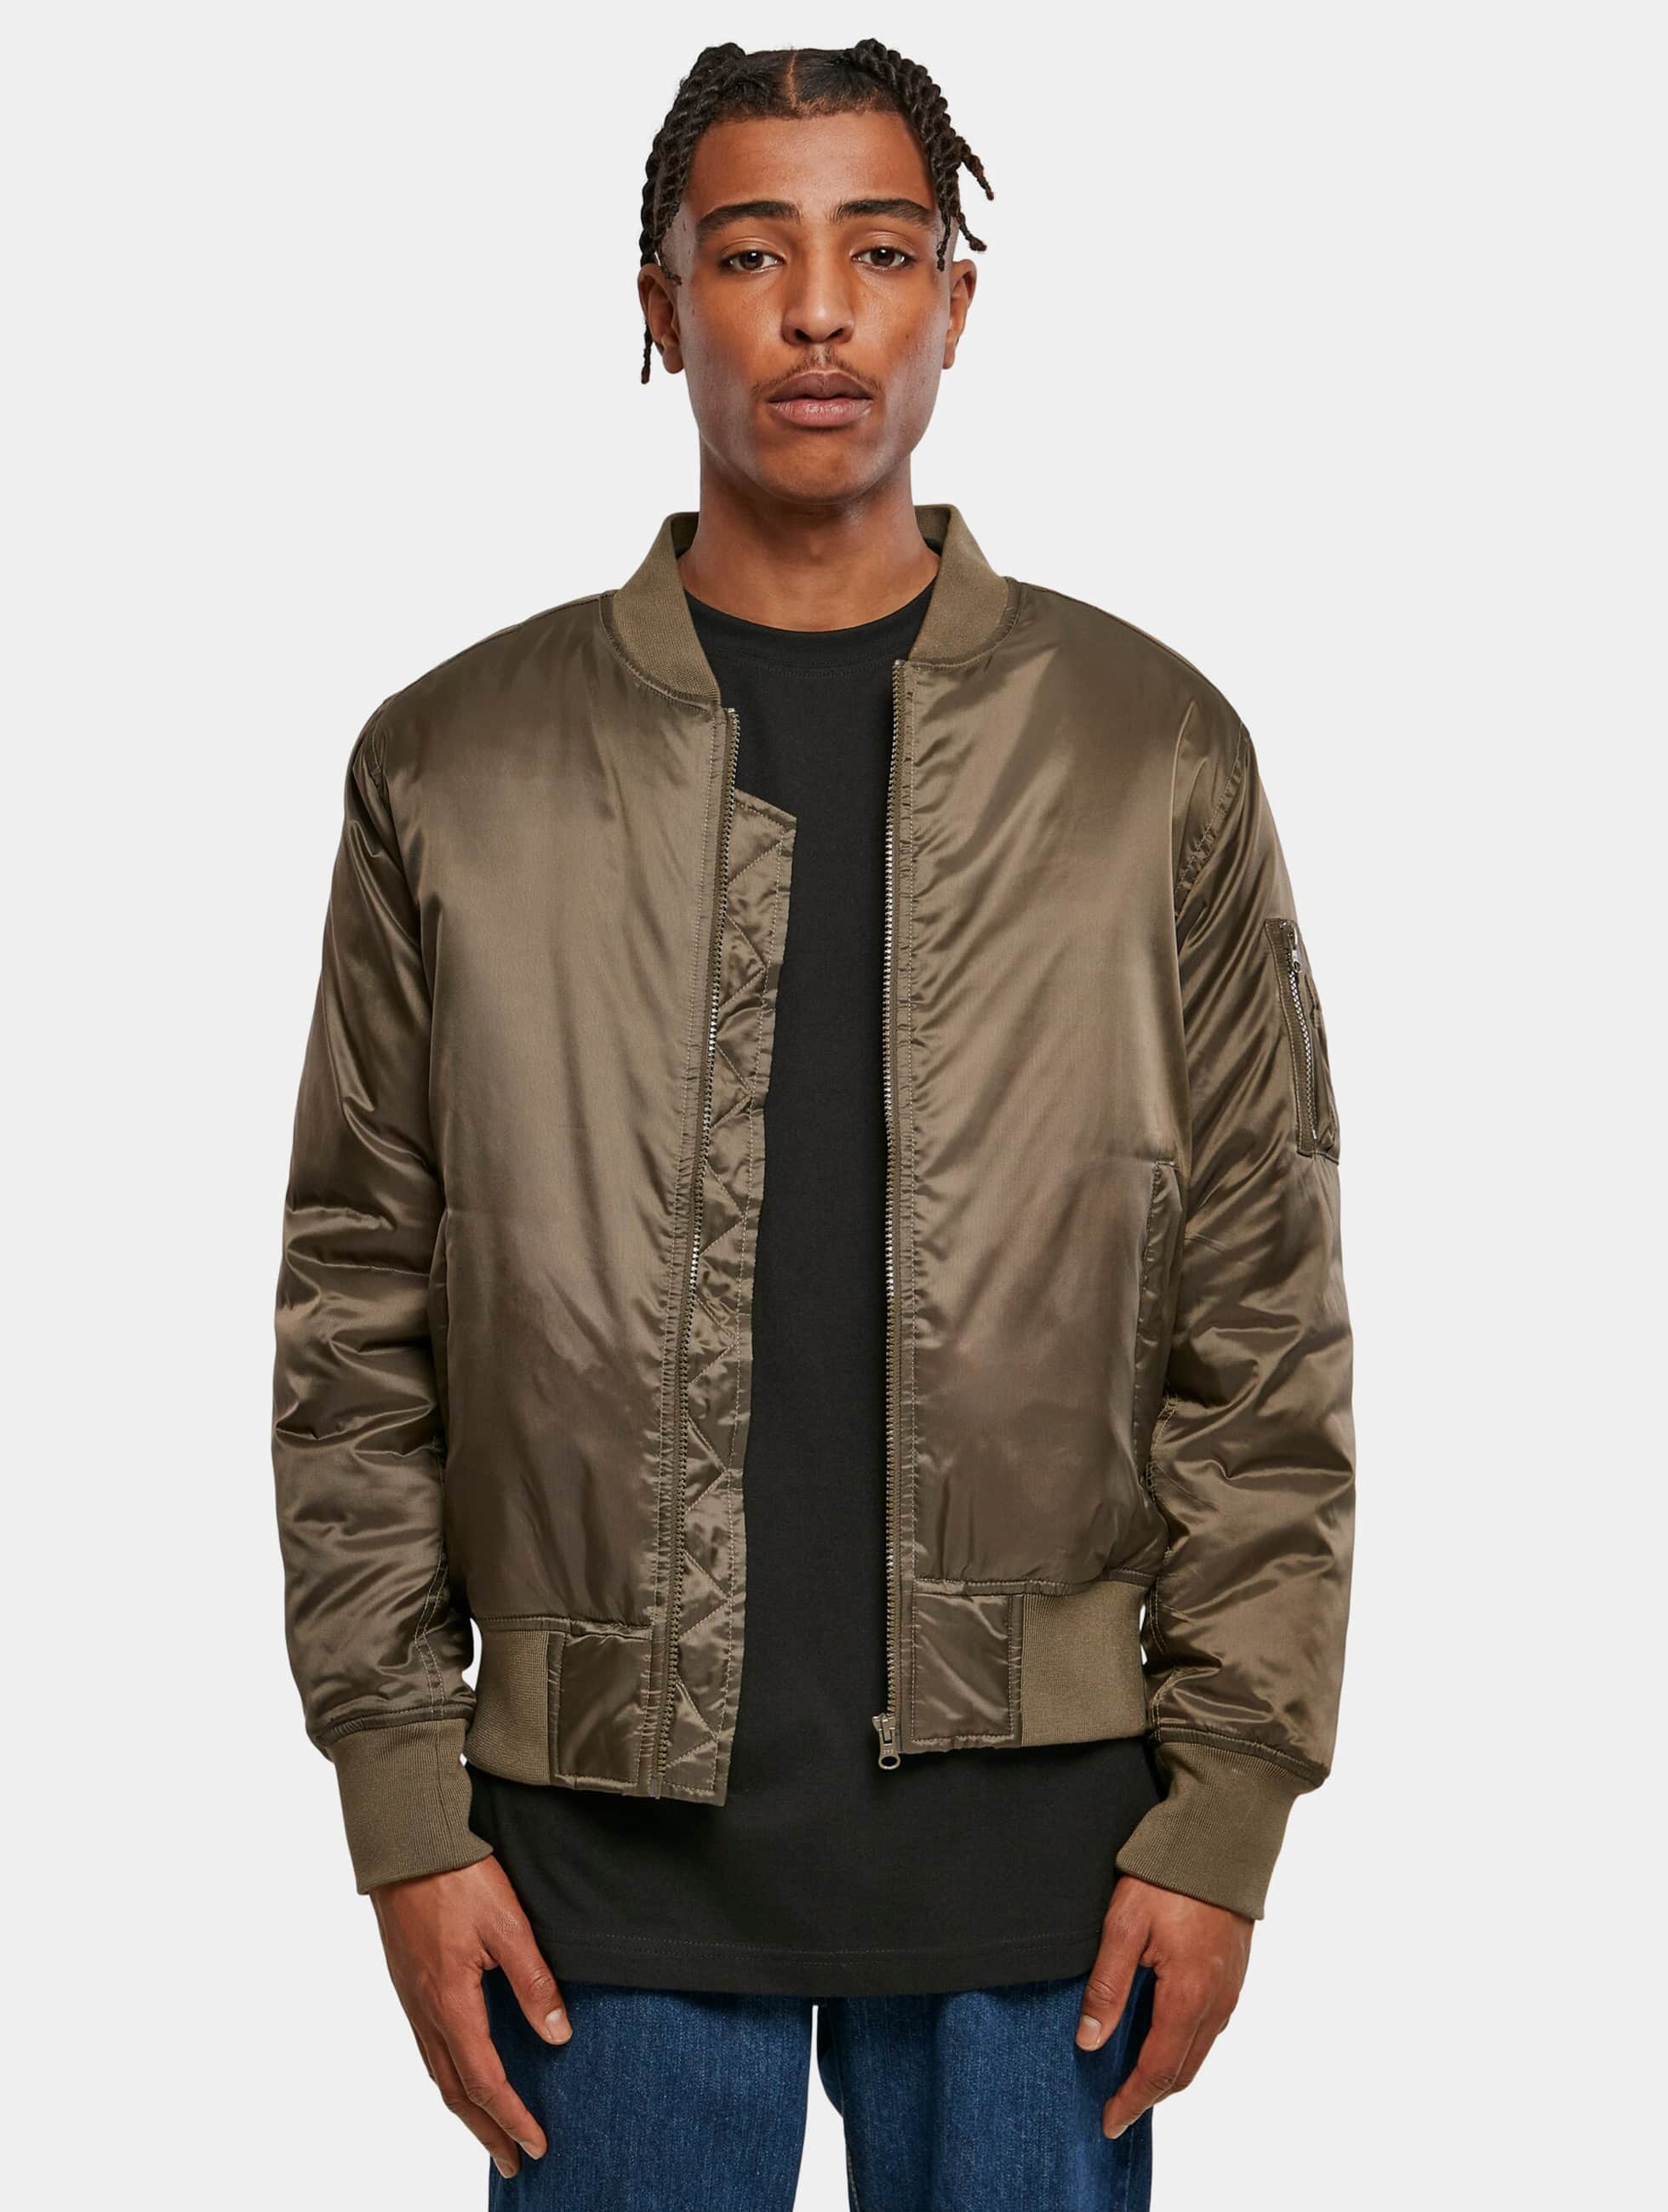 Build Your Brand Jacket / Bomber jacket Bomber in olive 959547